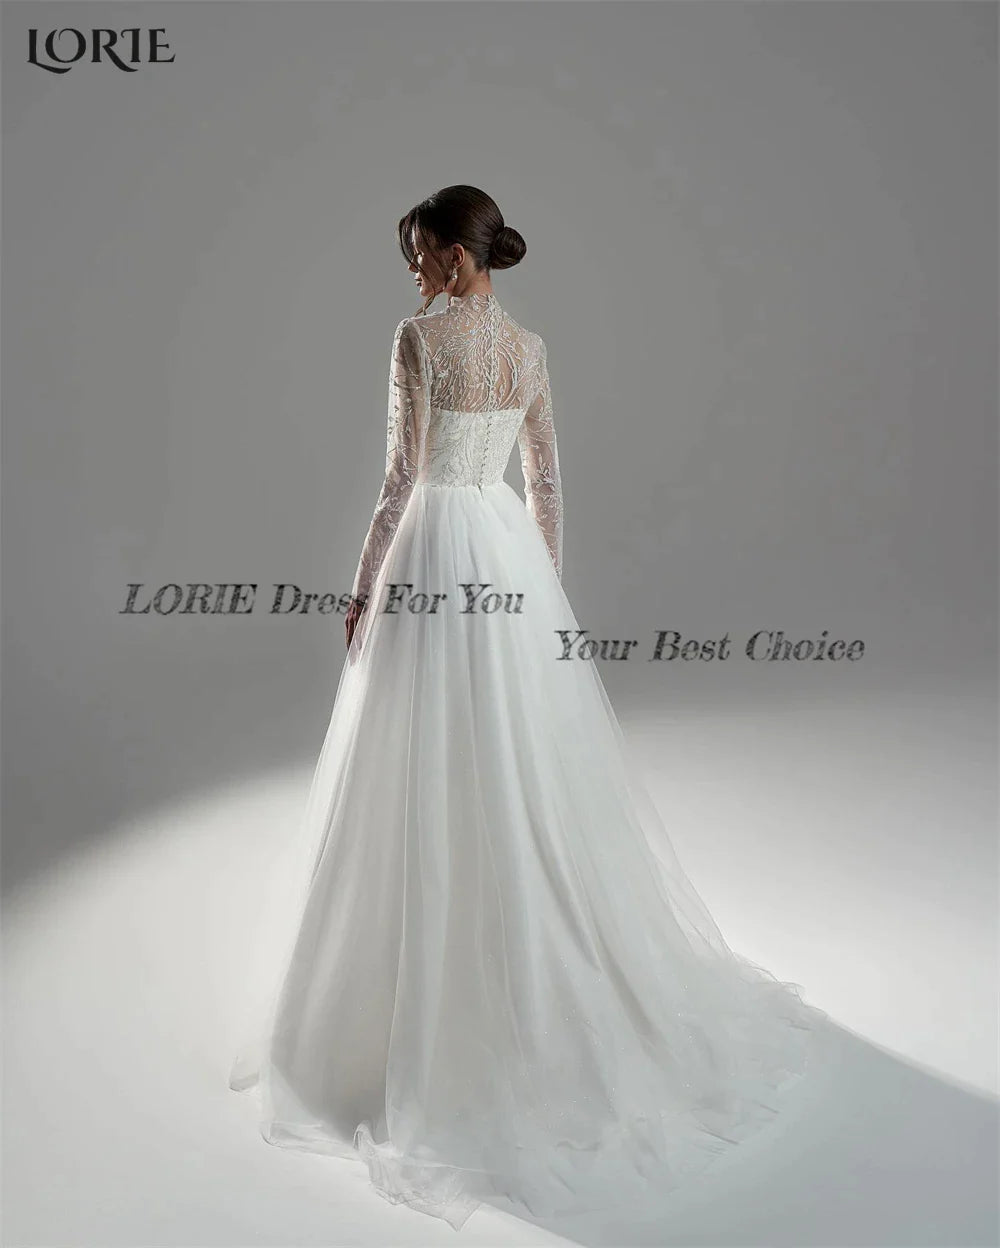 Bohemia Lace Wedding Dresses High Neck A-Line Floor Length Bridal Gowns Princess Appliques Bride Dress vestidos de novia